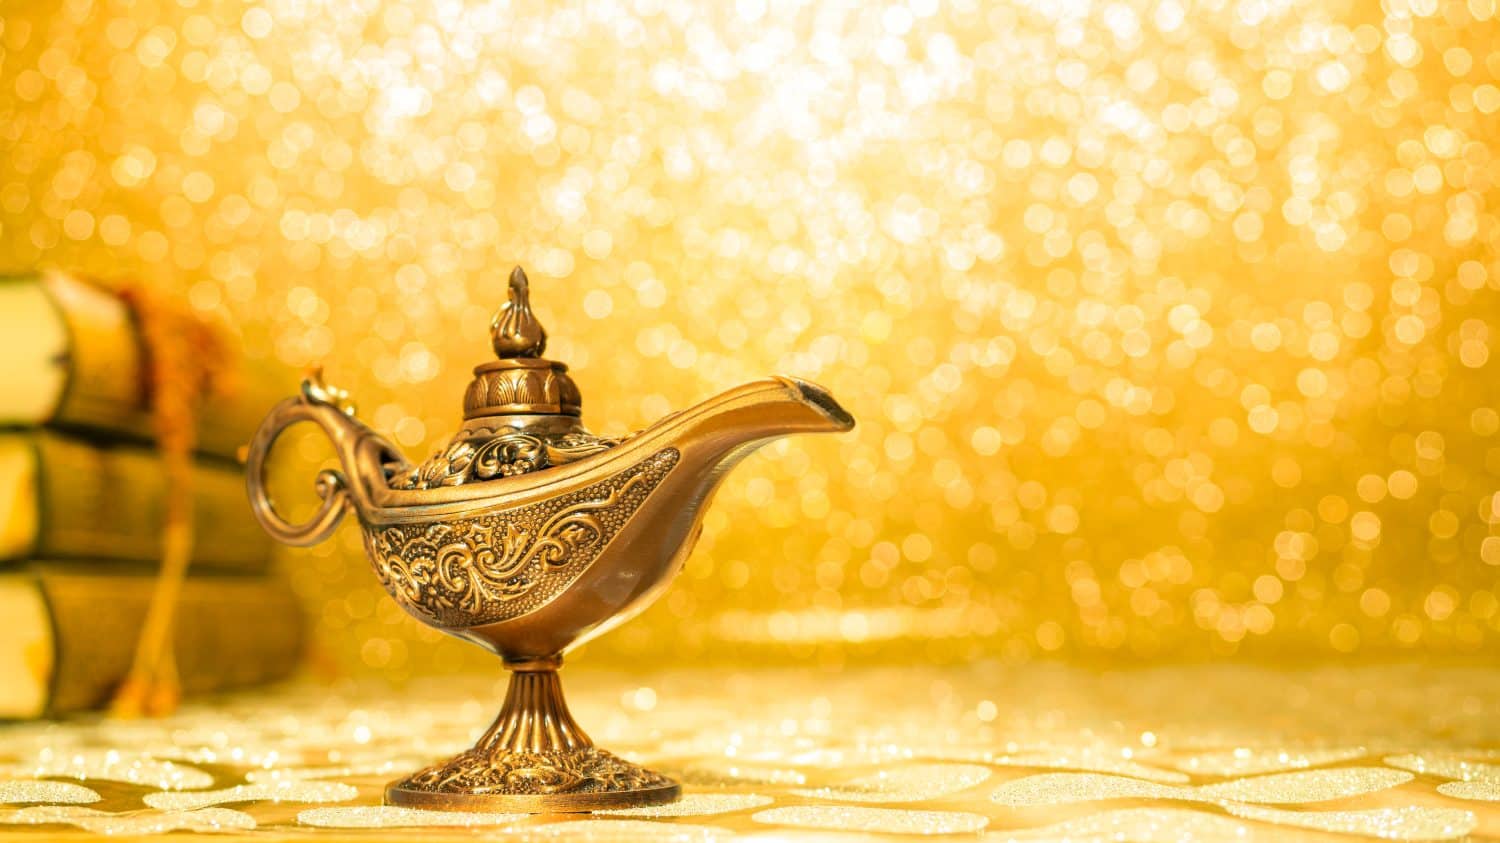 golden magic aladdin's lamp on bright and blur background